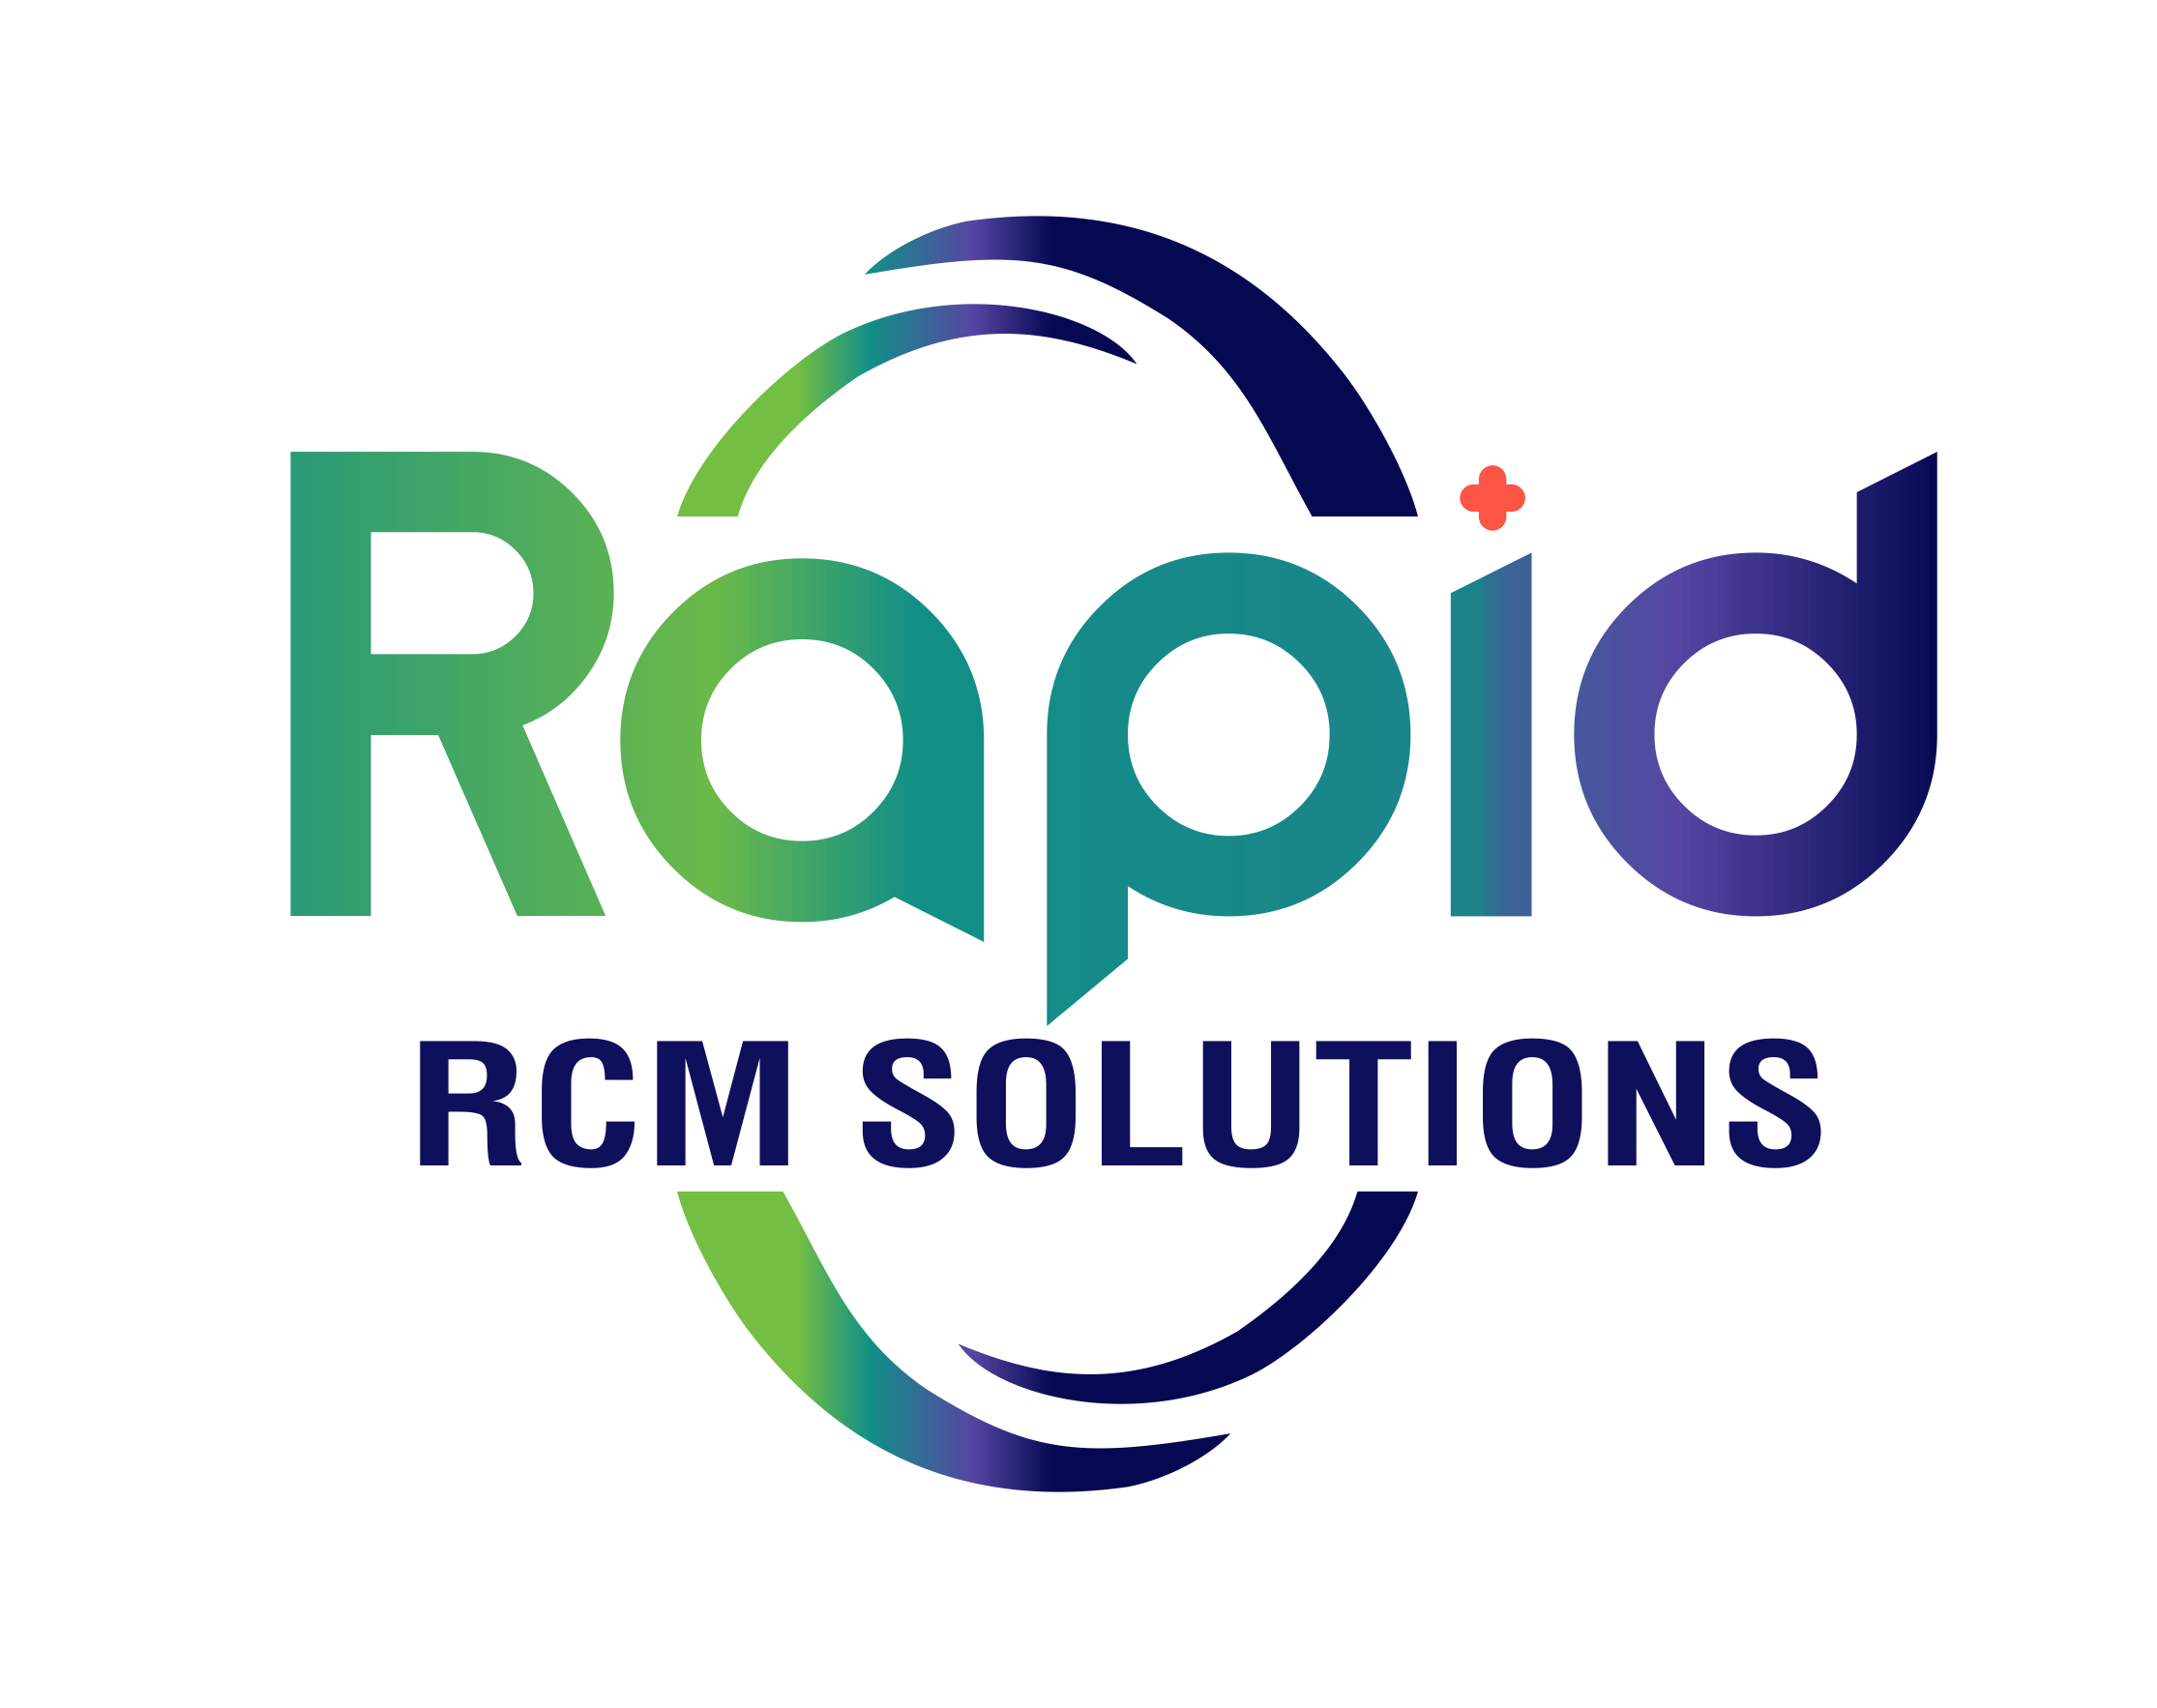 Rapid RCM Solutions